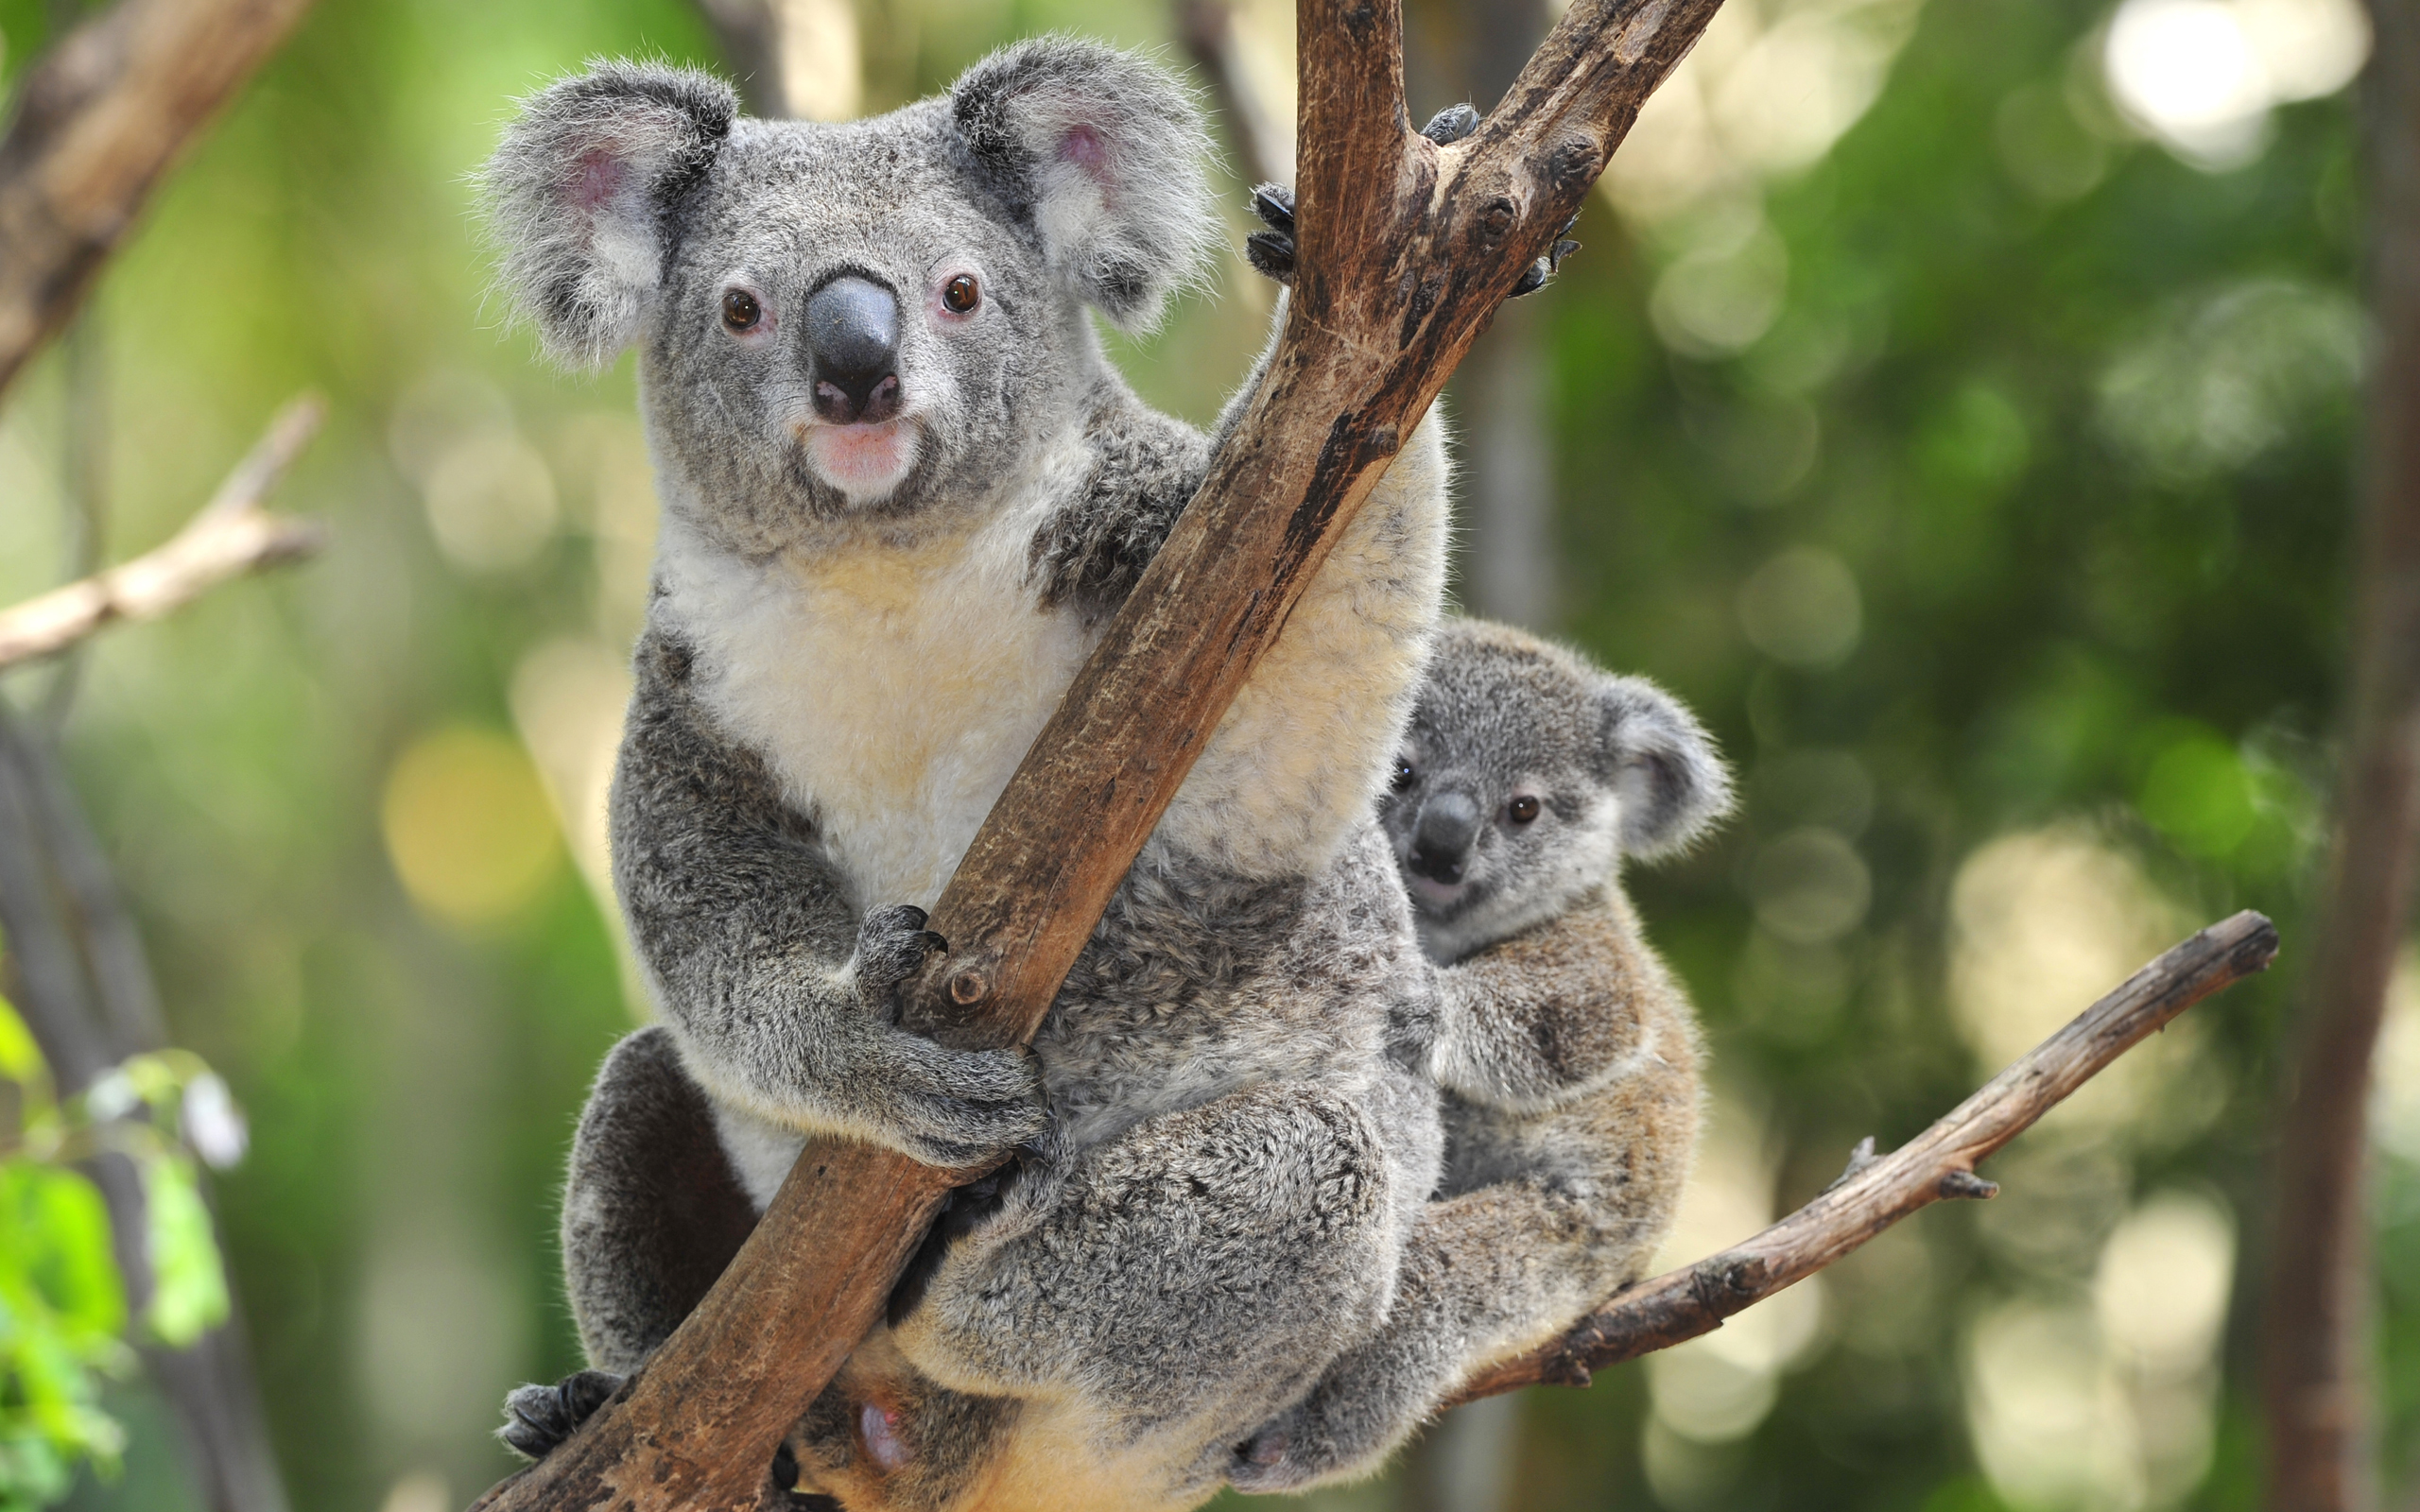 Koala Wallpaper Windows Image Amp Pictures Becuo